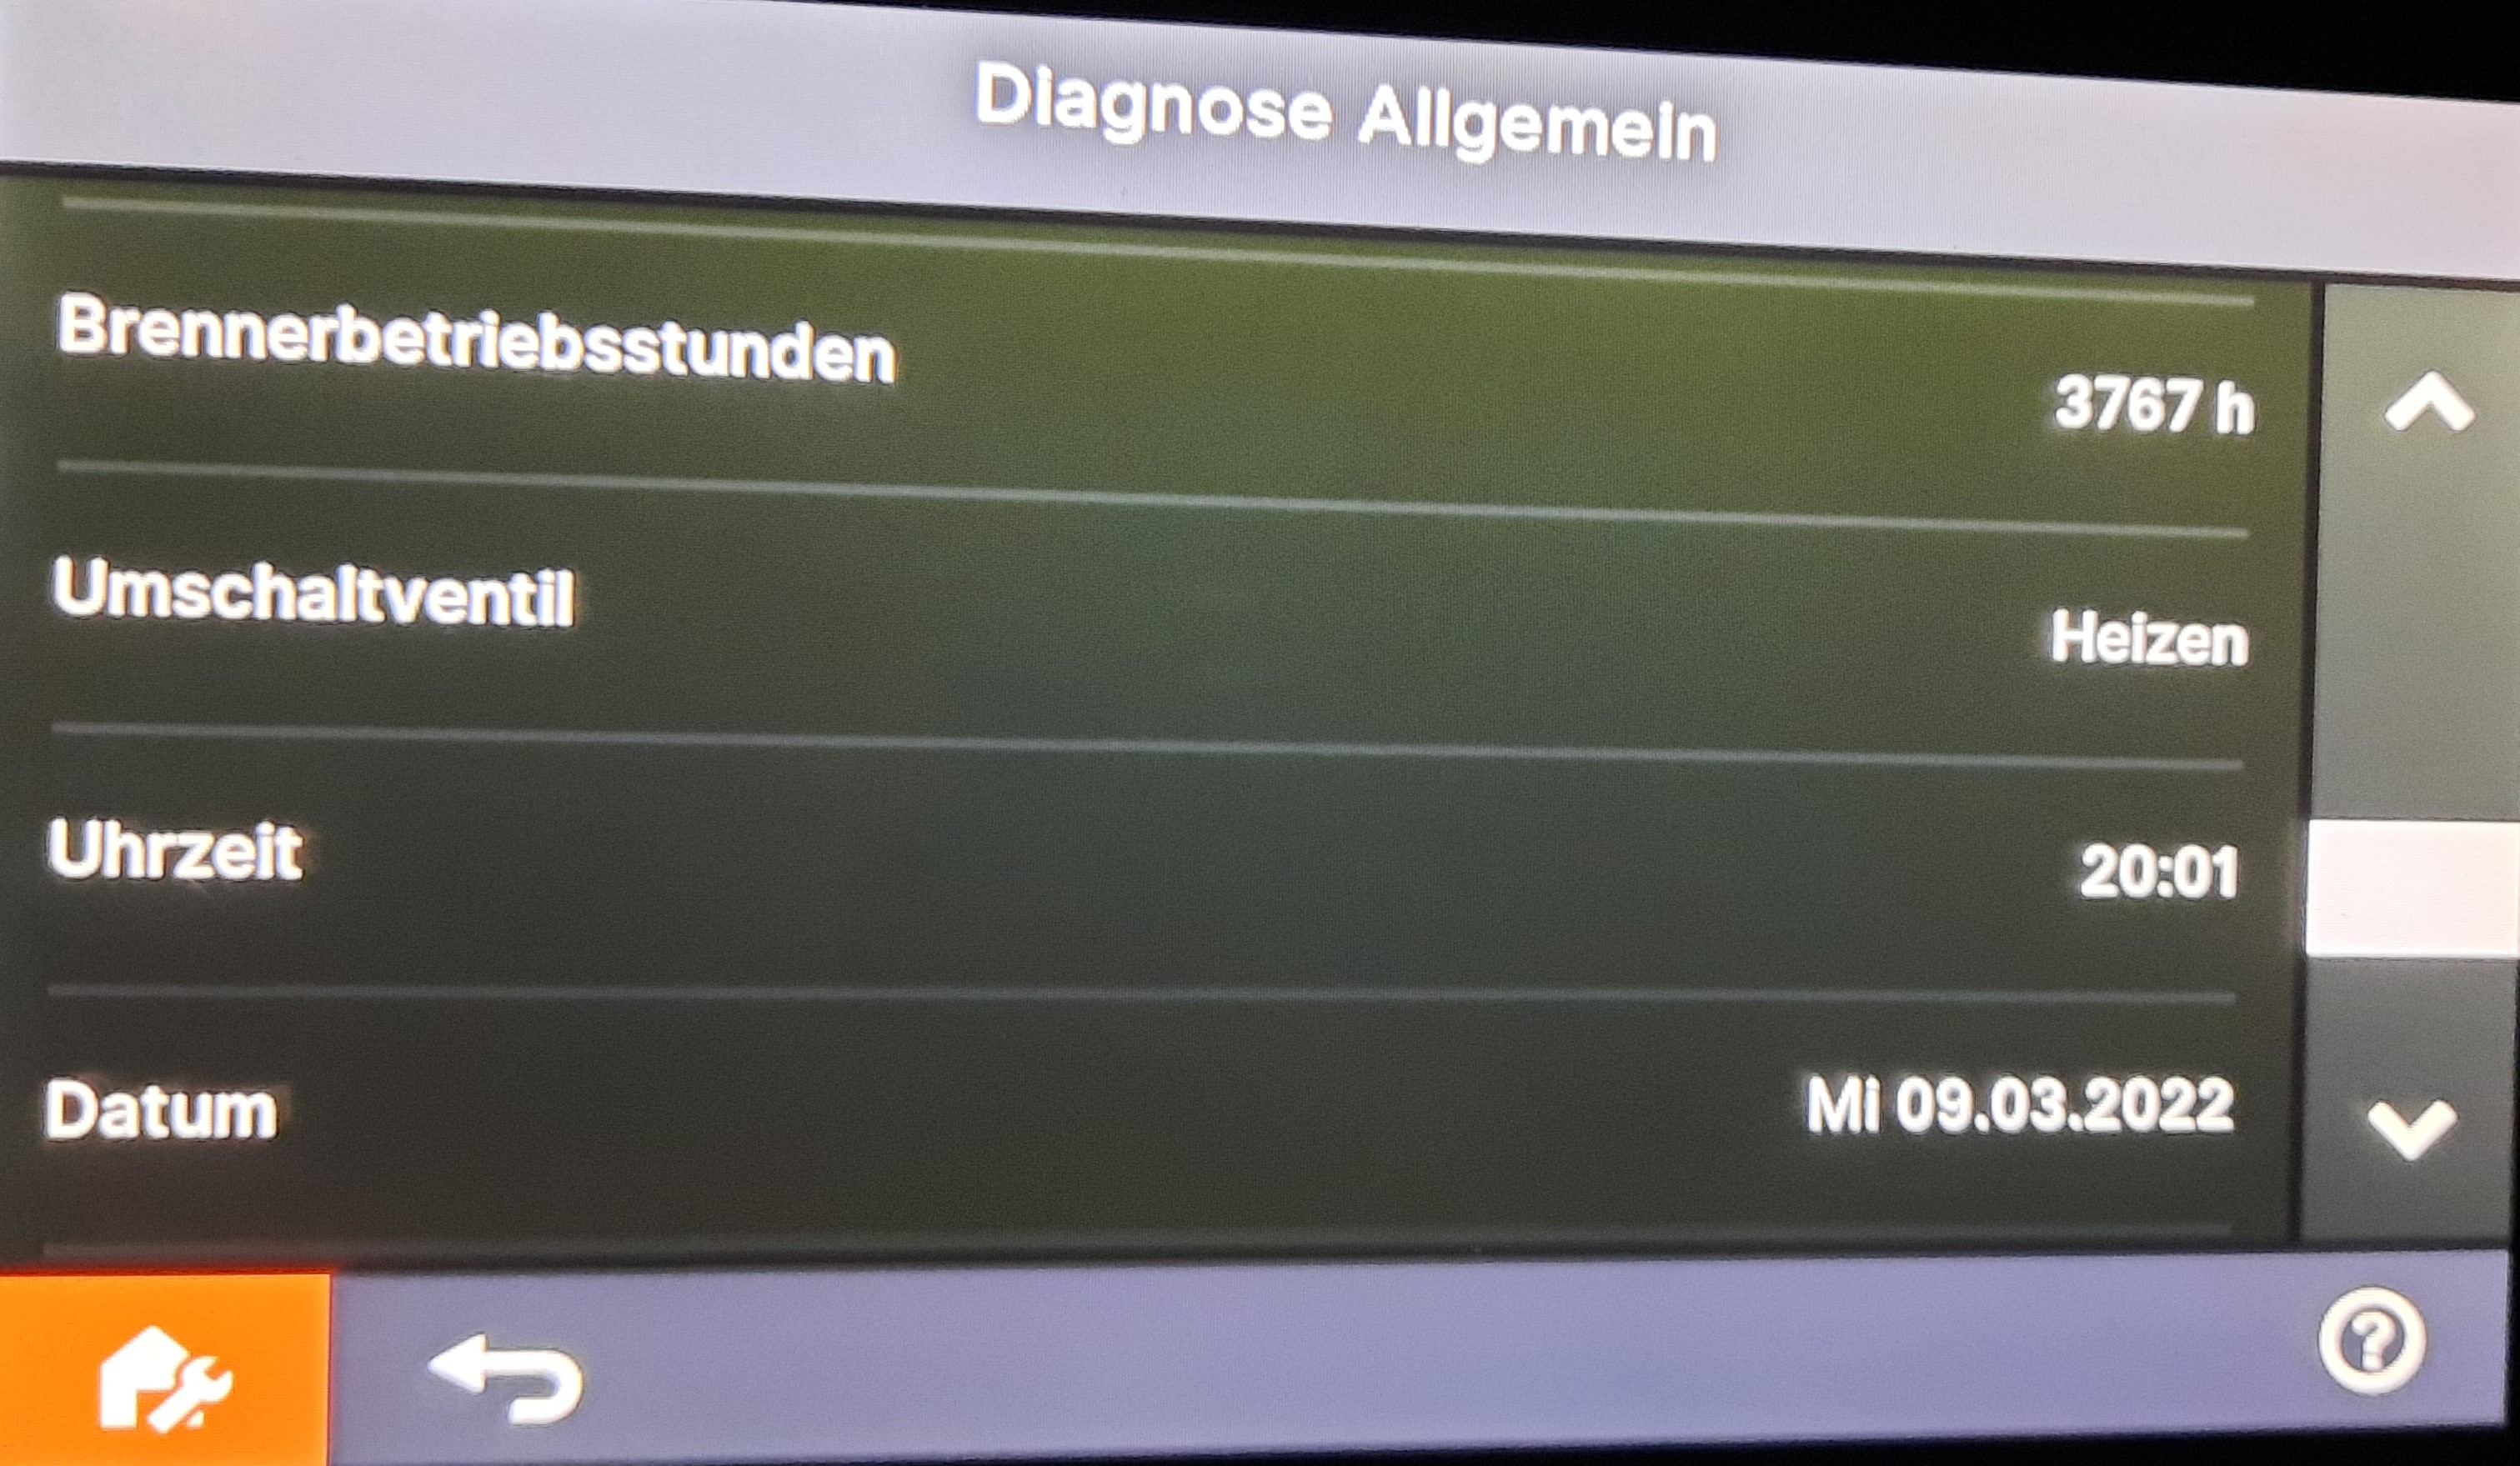 6_Display_Diagnose_Allgemein.jpg